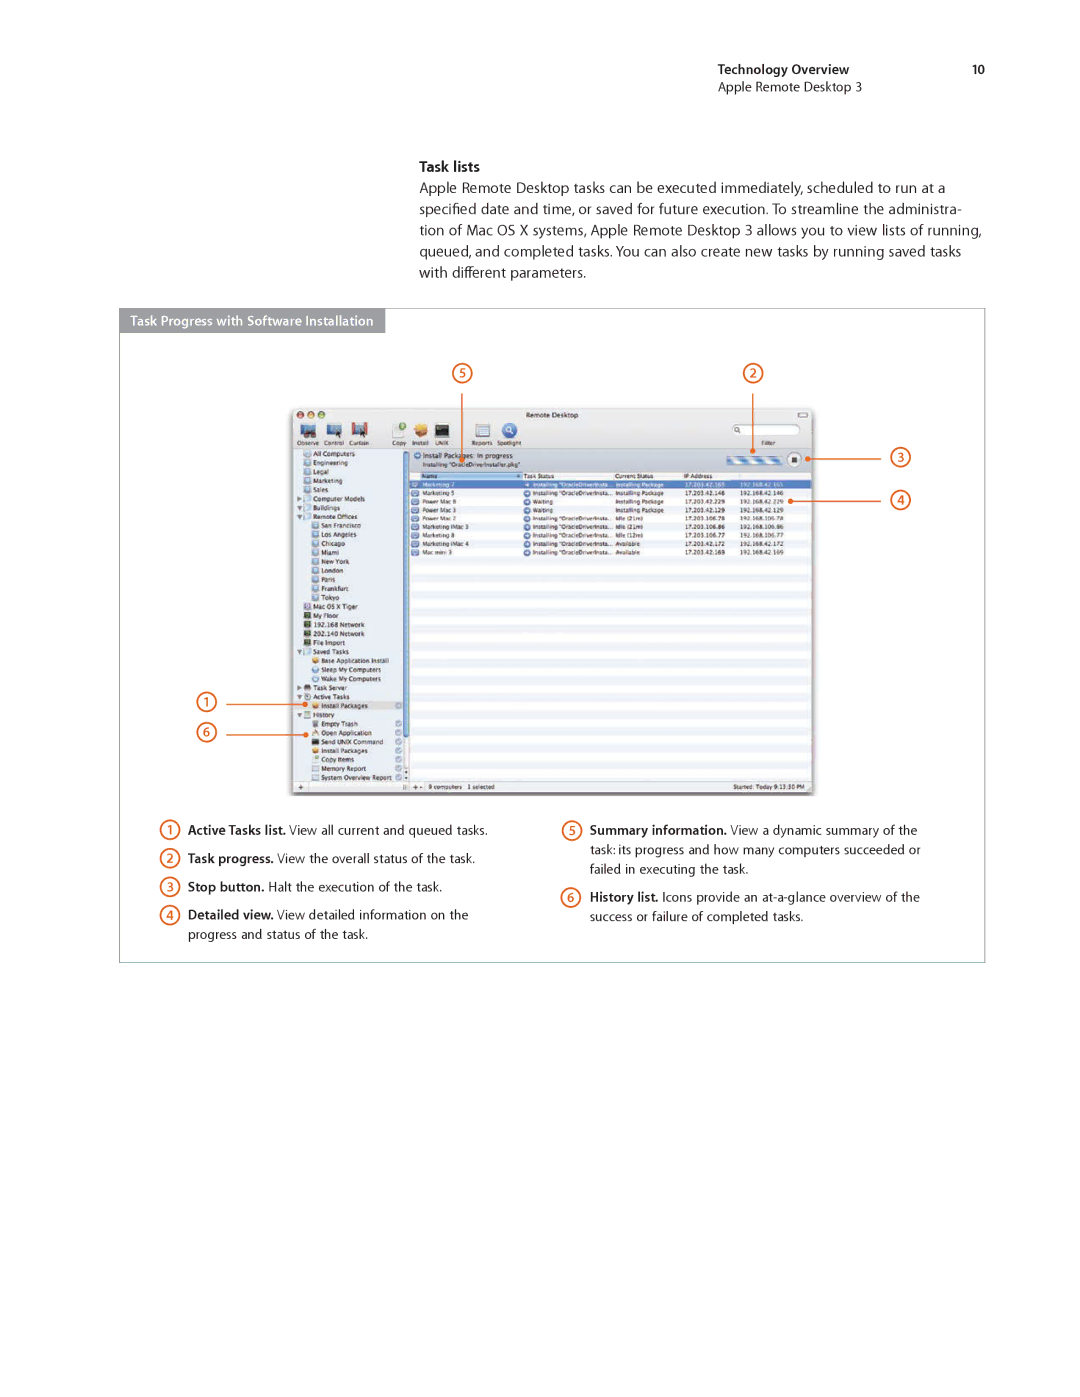 Apple ARD31 manual Task lists, Task Progress with Software Installation 